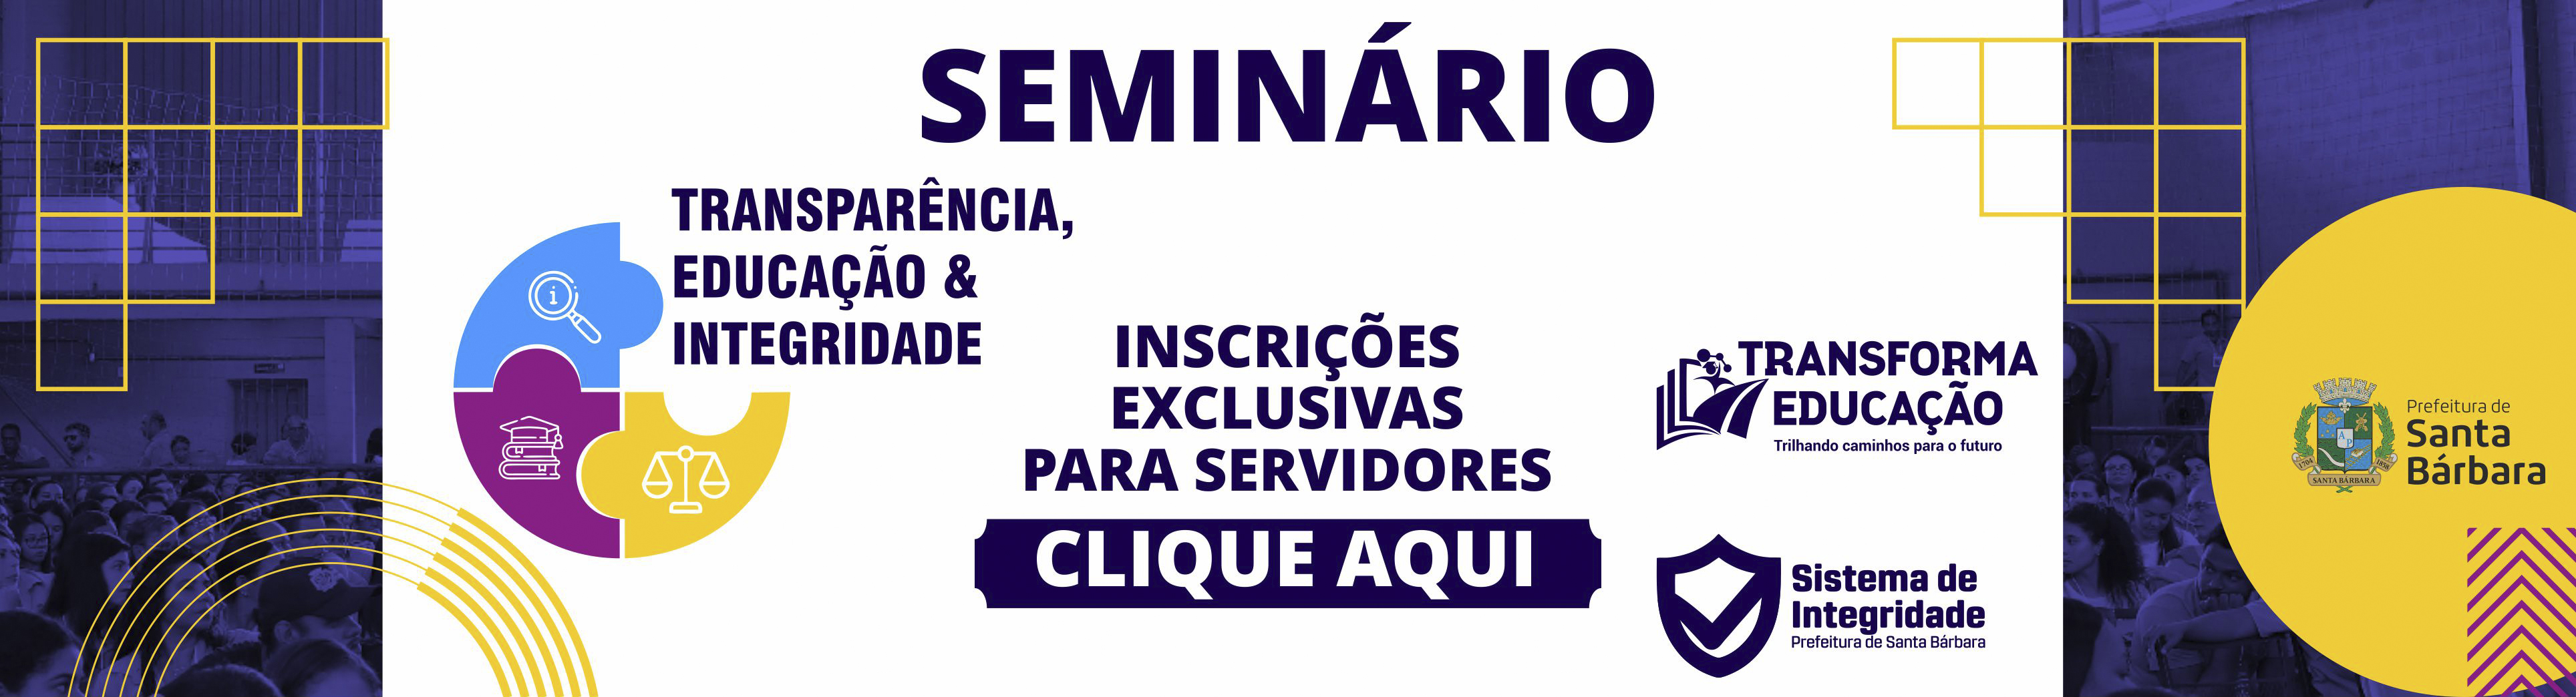 Banner Semin�rio